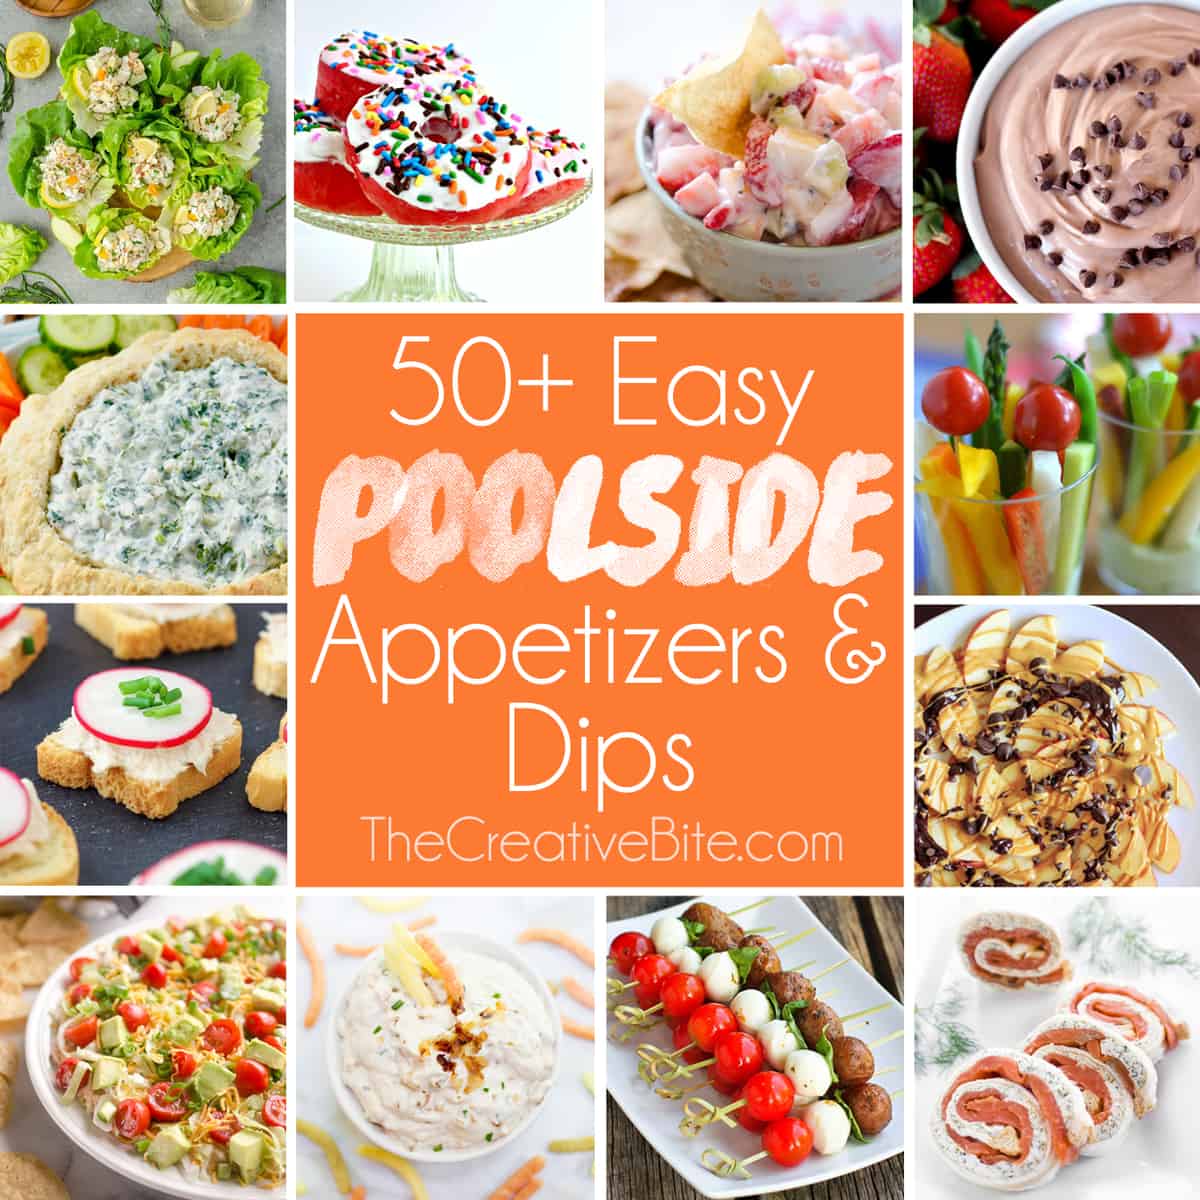 50+ Easy Poolside Appetizers & Dips